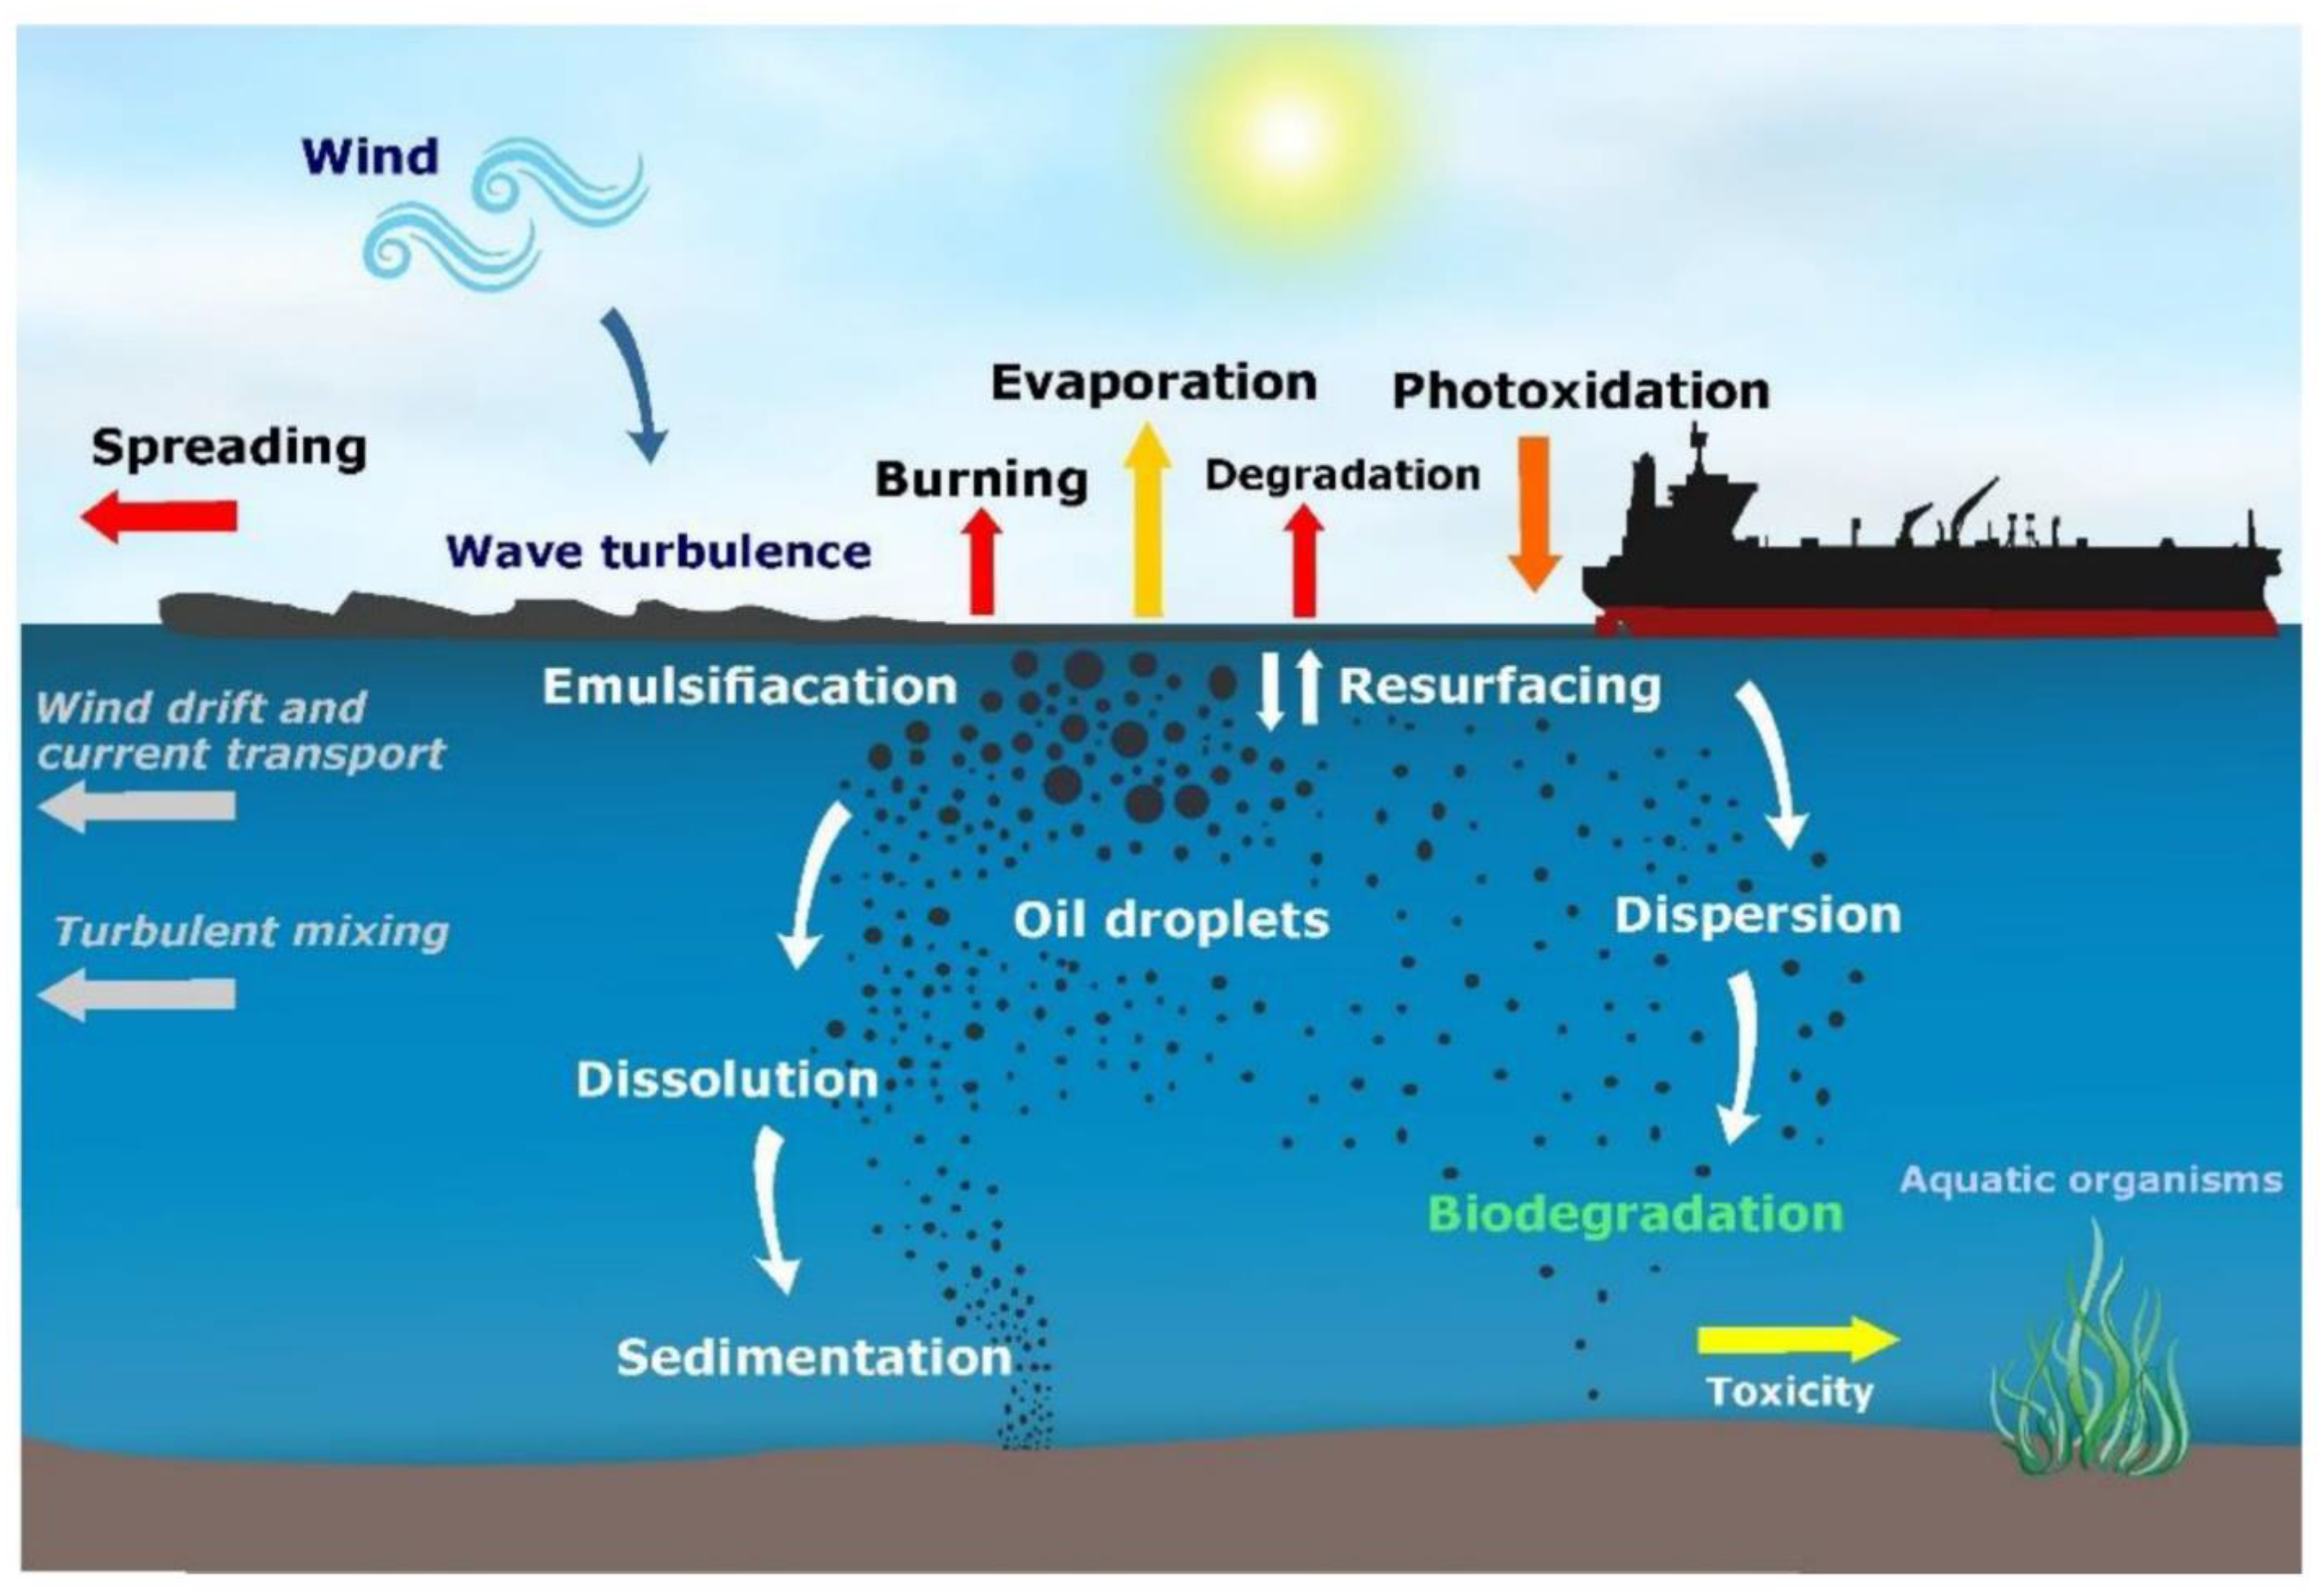 Deep-ocean biodeterioration of materials. Materials; Marine